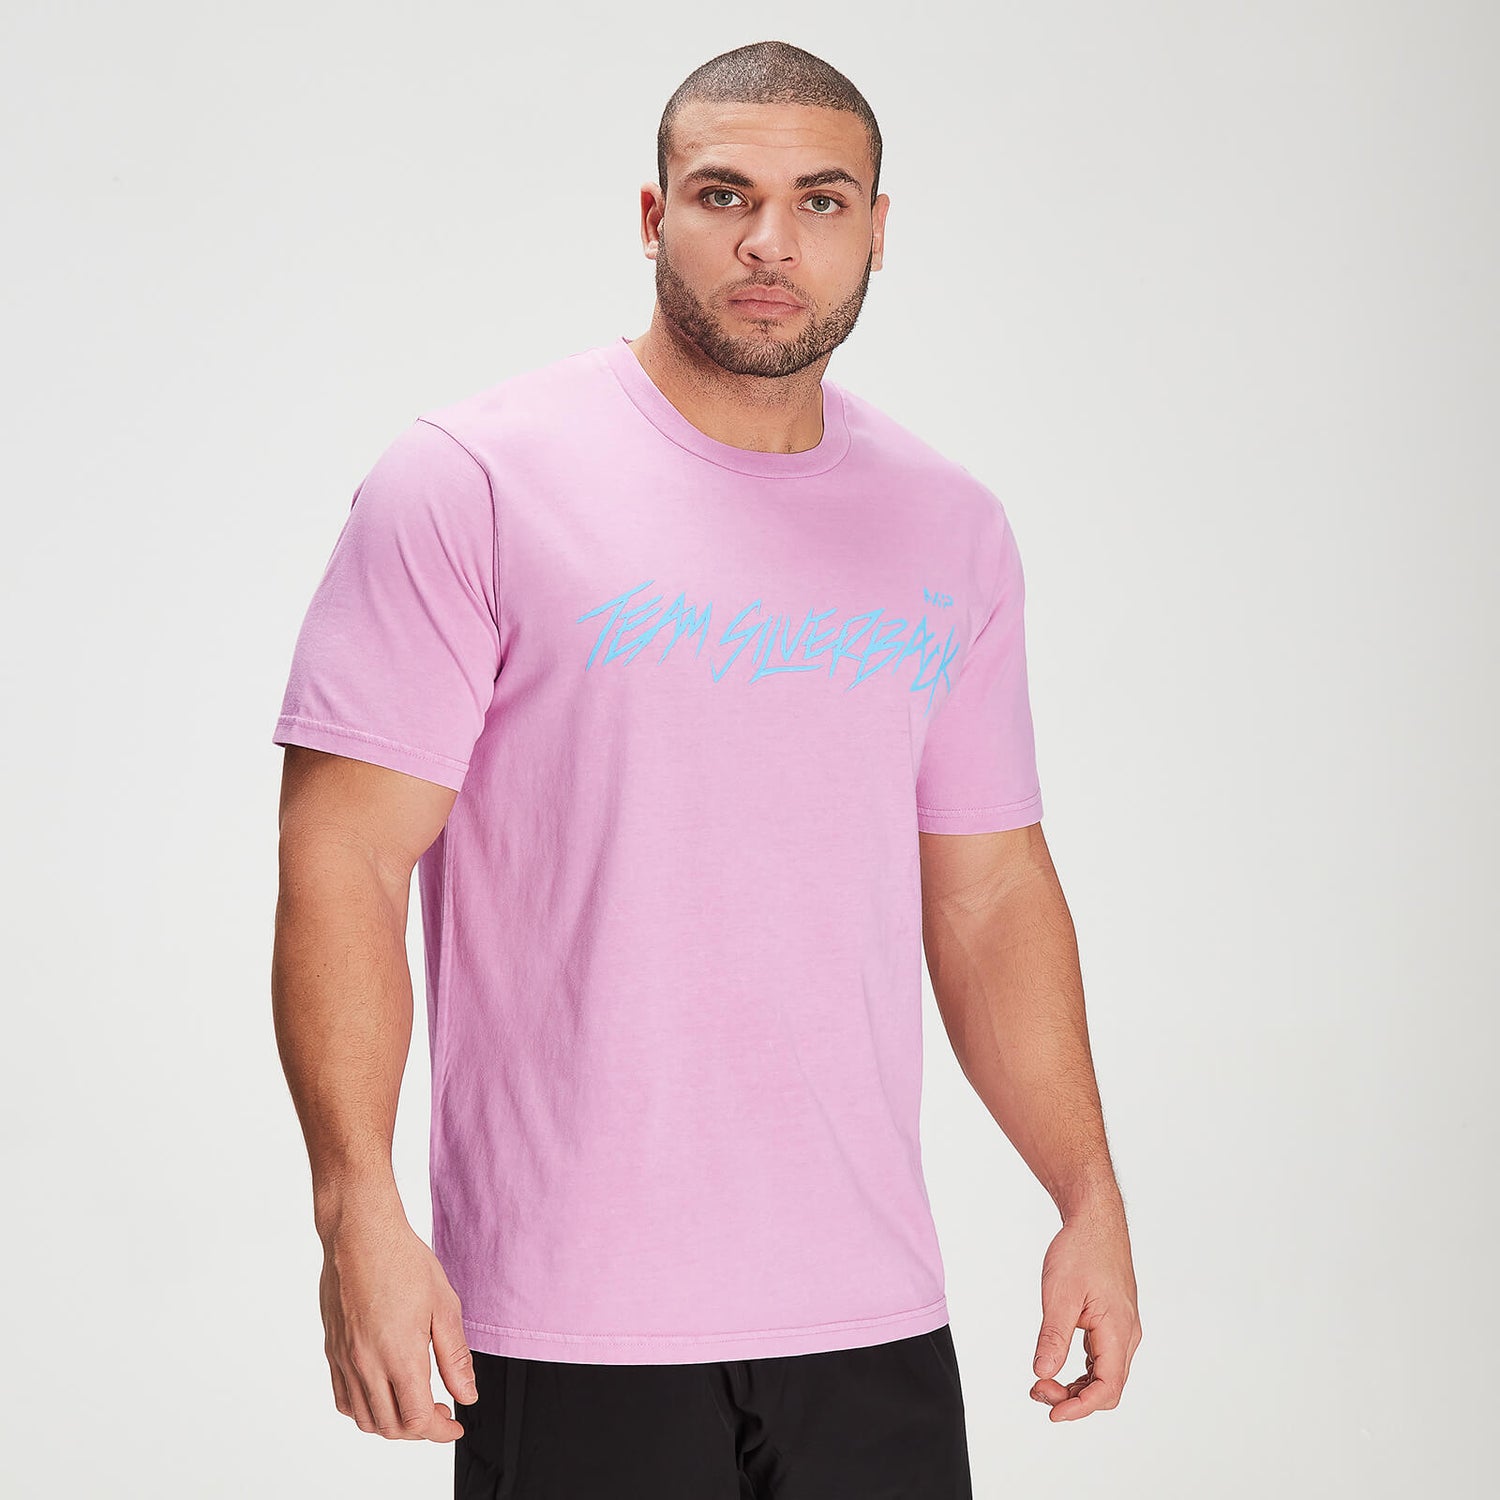 MP X Zack George Men's Washed T-Shirt - Pink Lavender - XXS